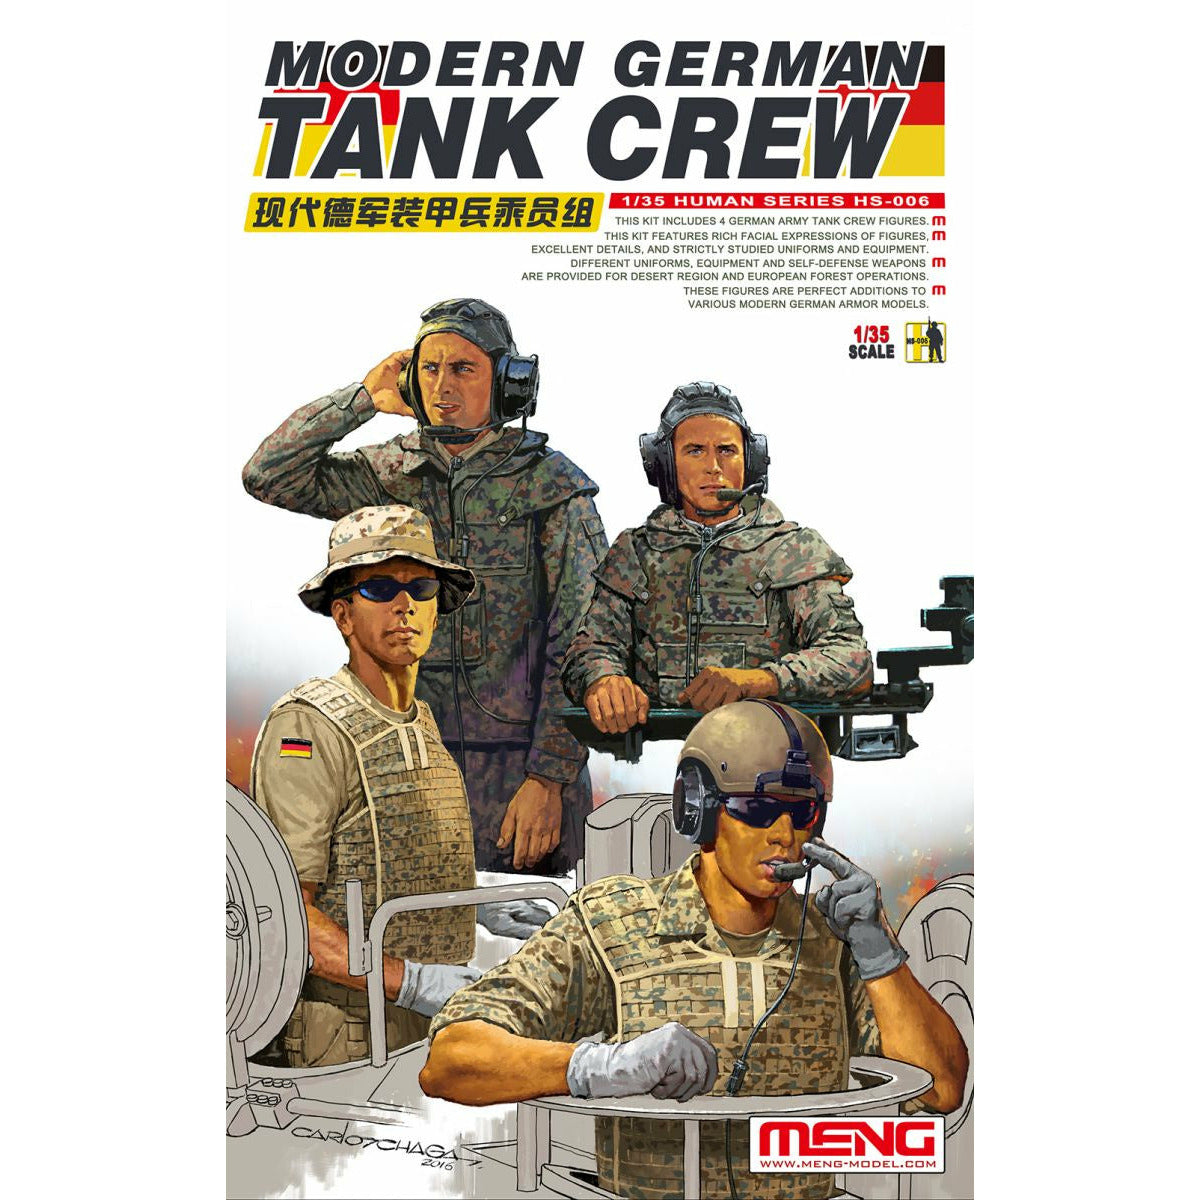 Modern German Tank Crew HS-006 - 1/35 Human Series by Meng